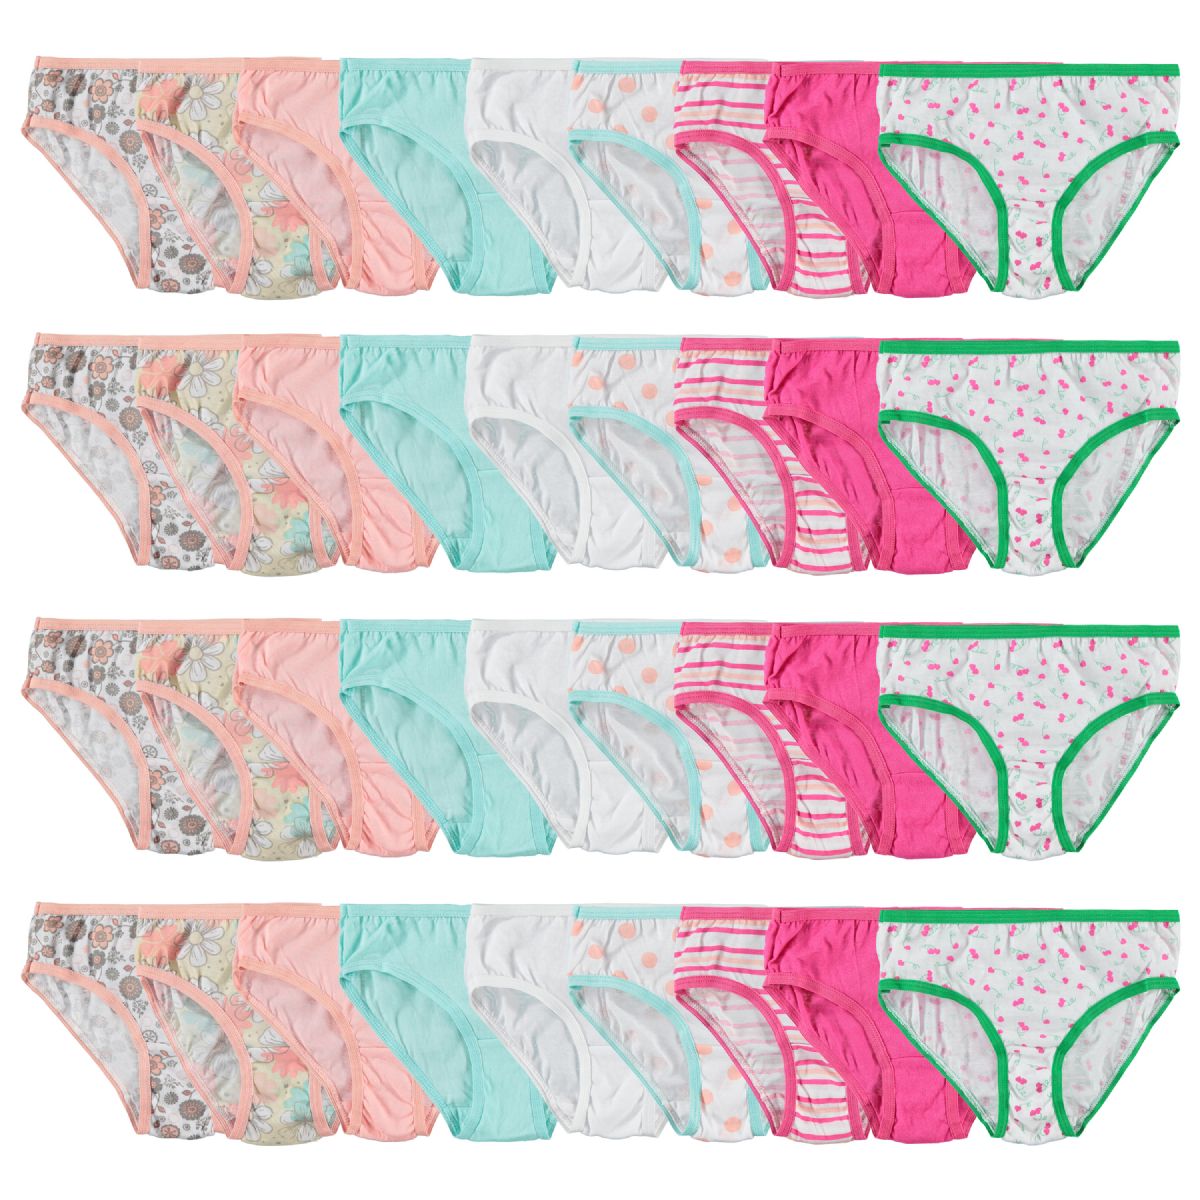 72 Wholesale Girls Cotton Blend Assorted Printed Underwear Size 8